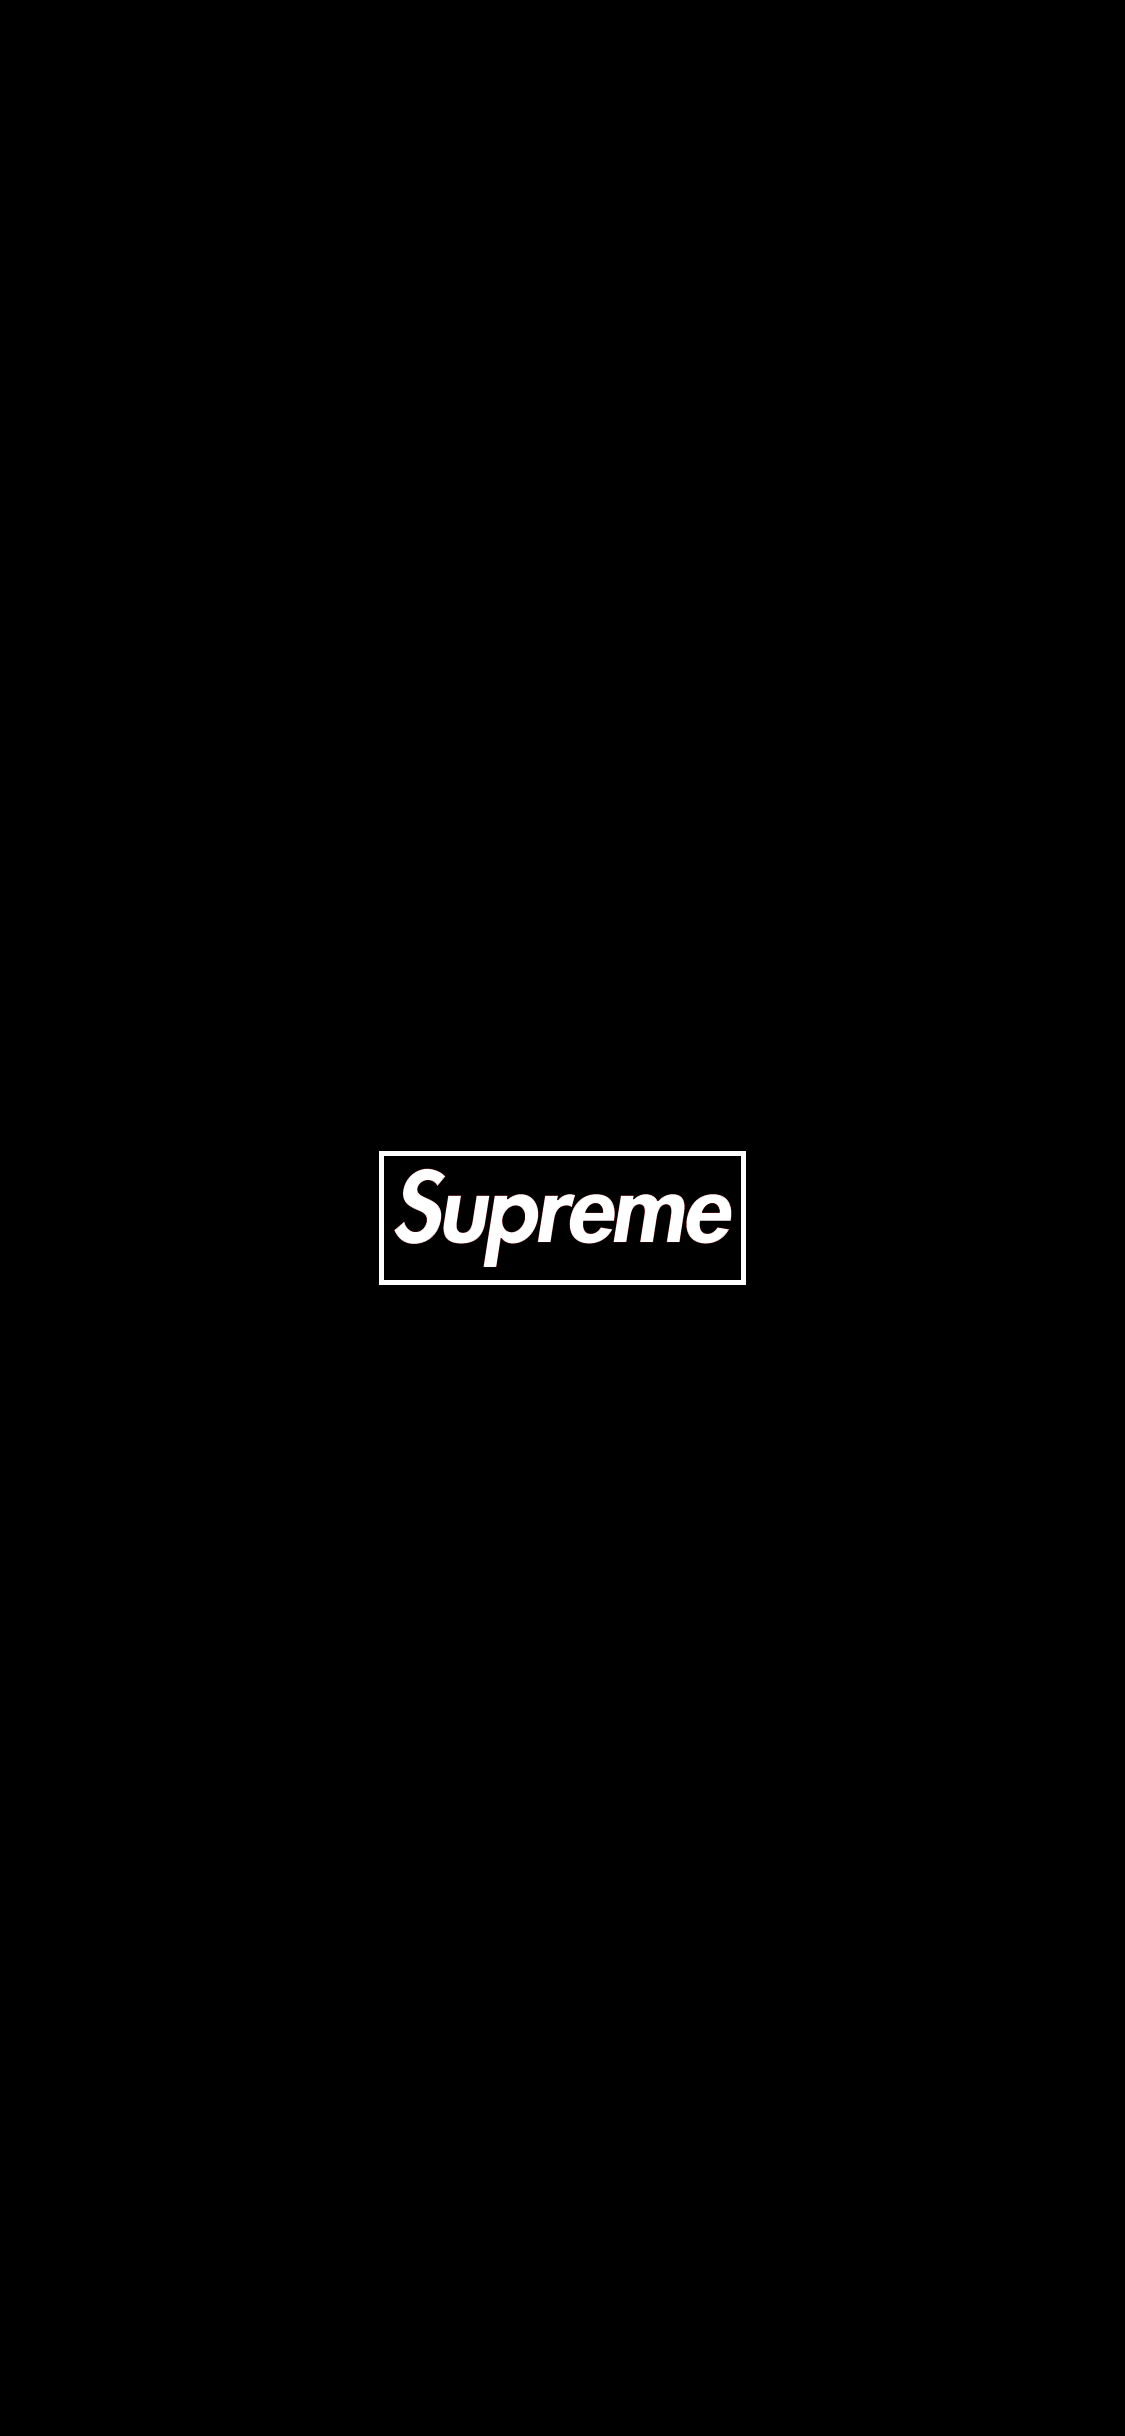 Black box logo. Supreme iphone wallpaper, Aesthetic iphone wallpaper, Supreme wallpaper